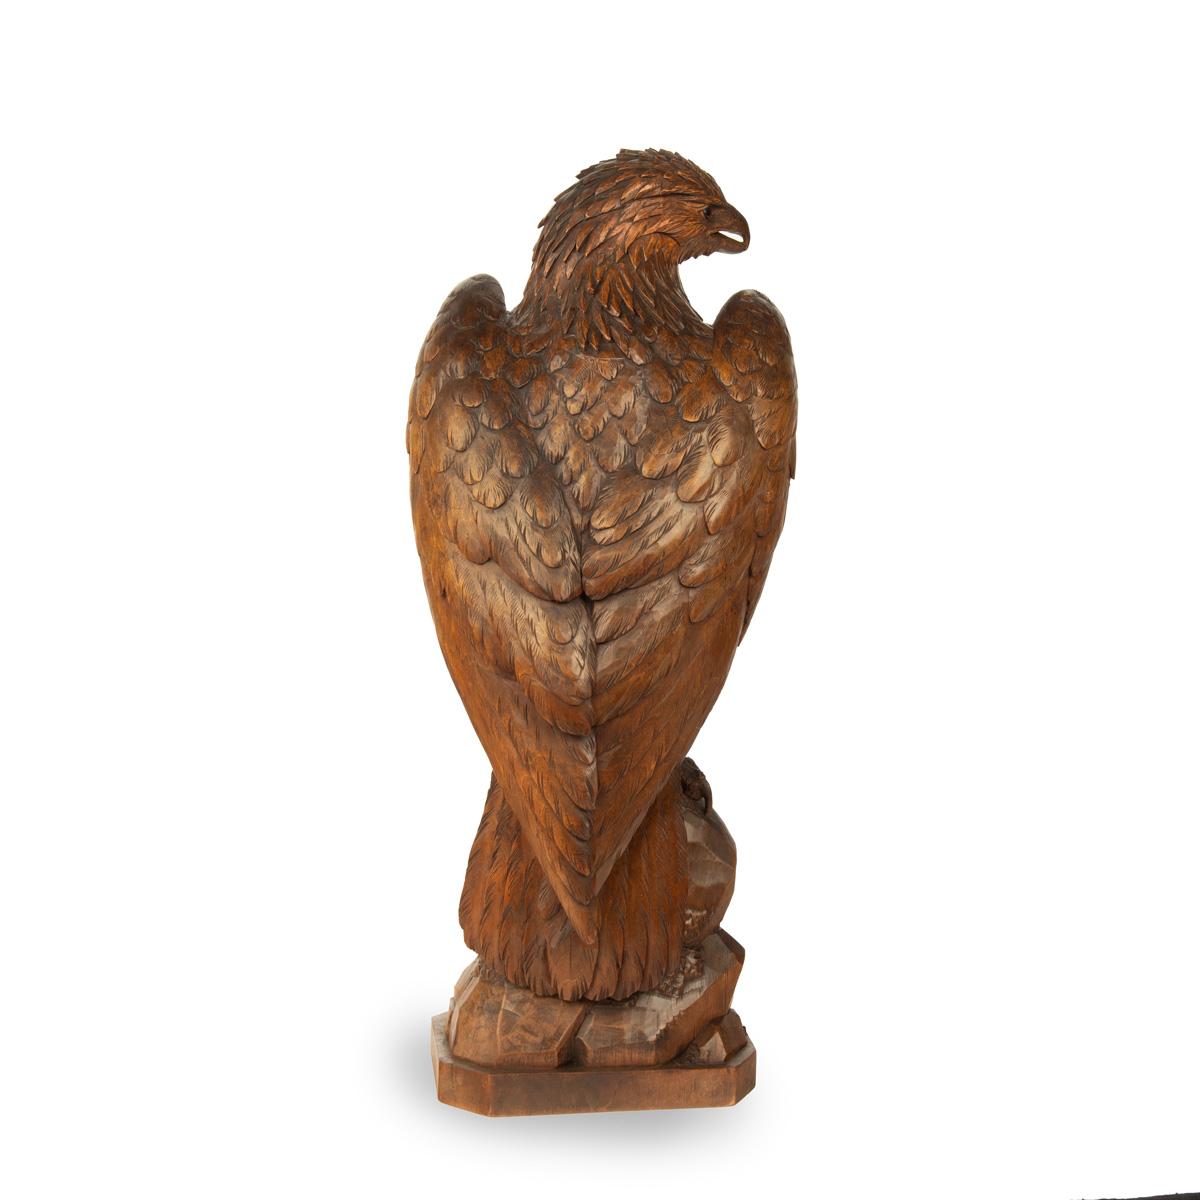 Black Forest linden wooden carving of an eagle